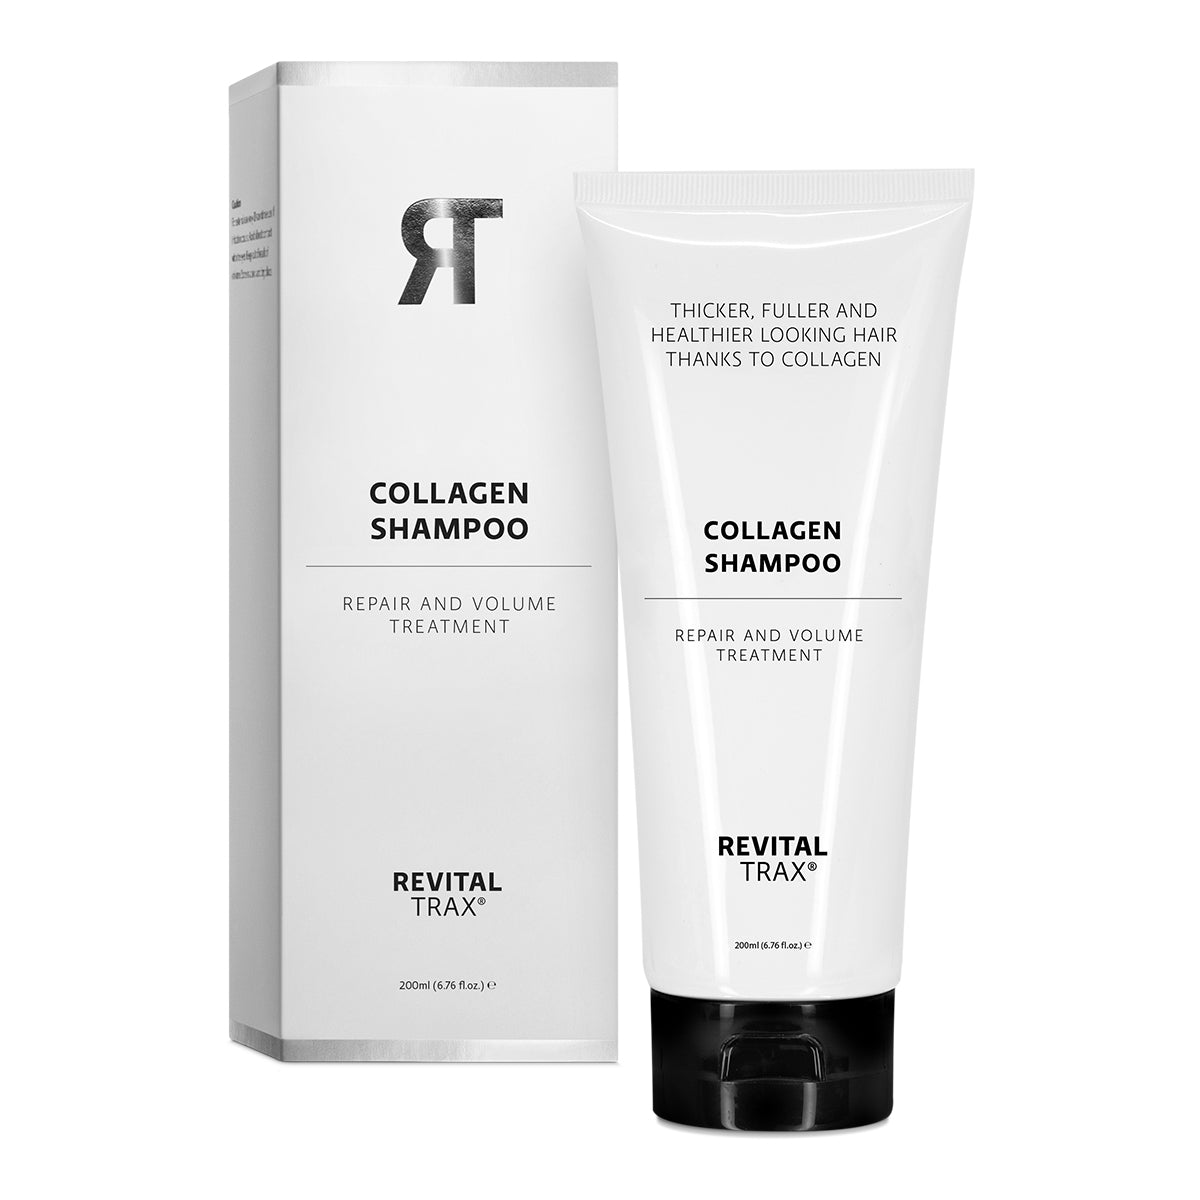 Collagen Hair Care Bundle - 3 Shampoo & 3 Conditioner